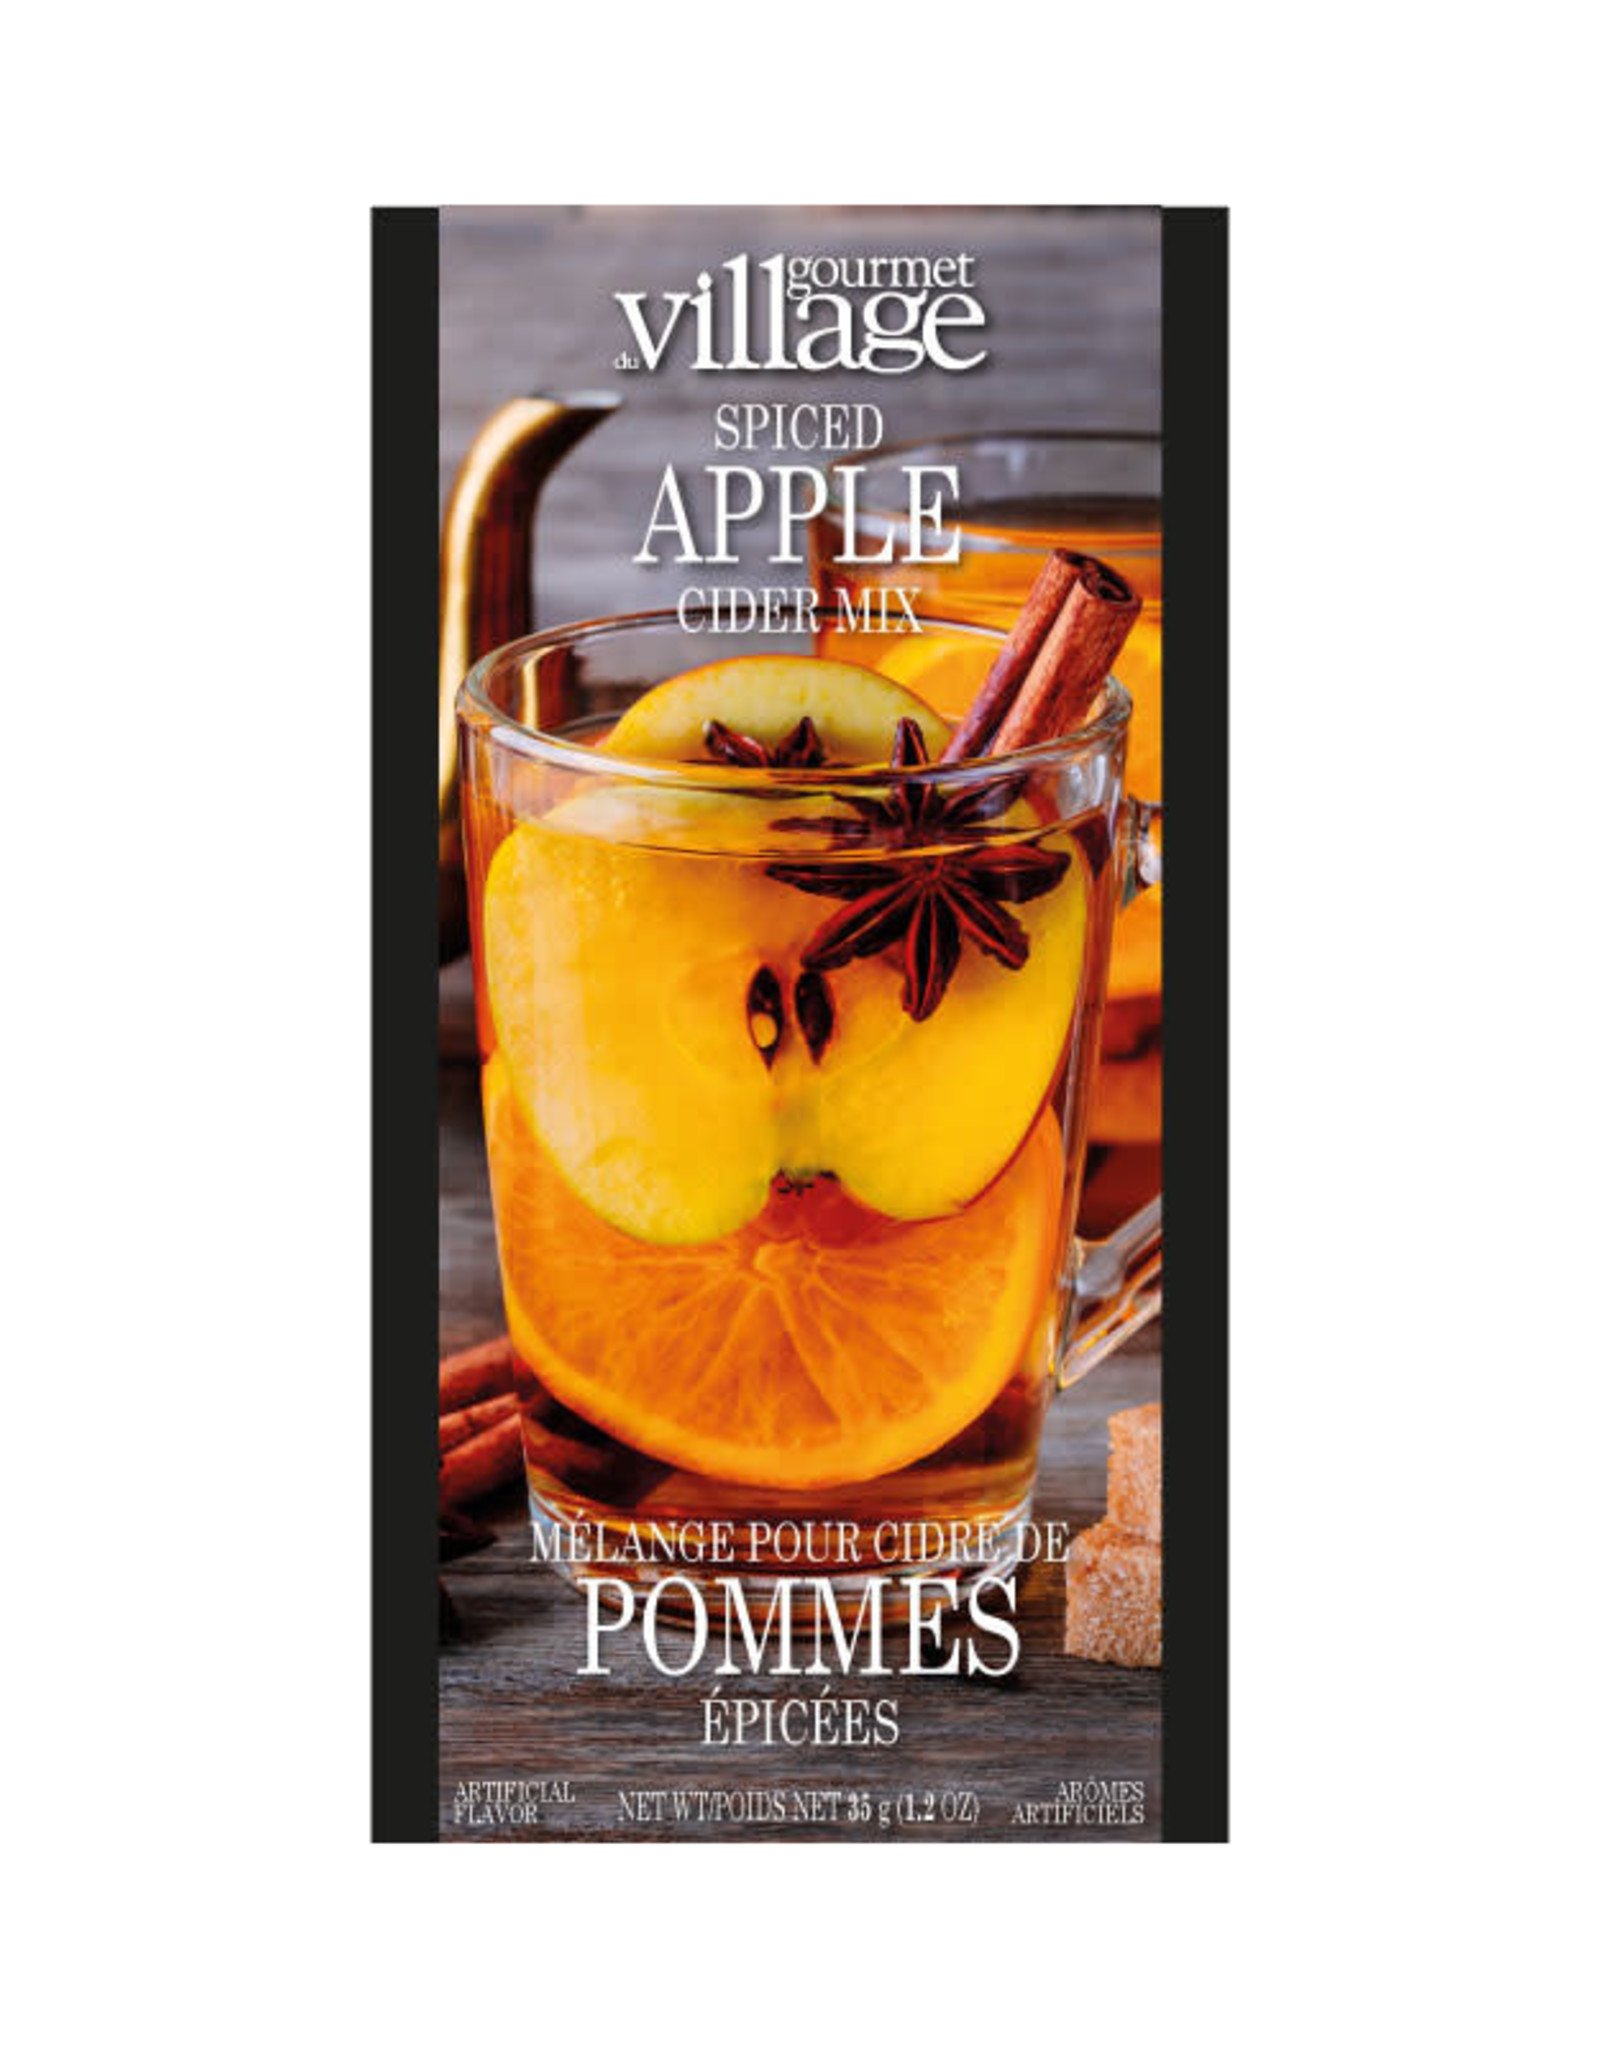 Gourmet Village Spiced Apple Cider Mix